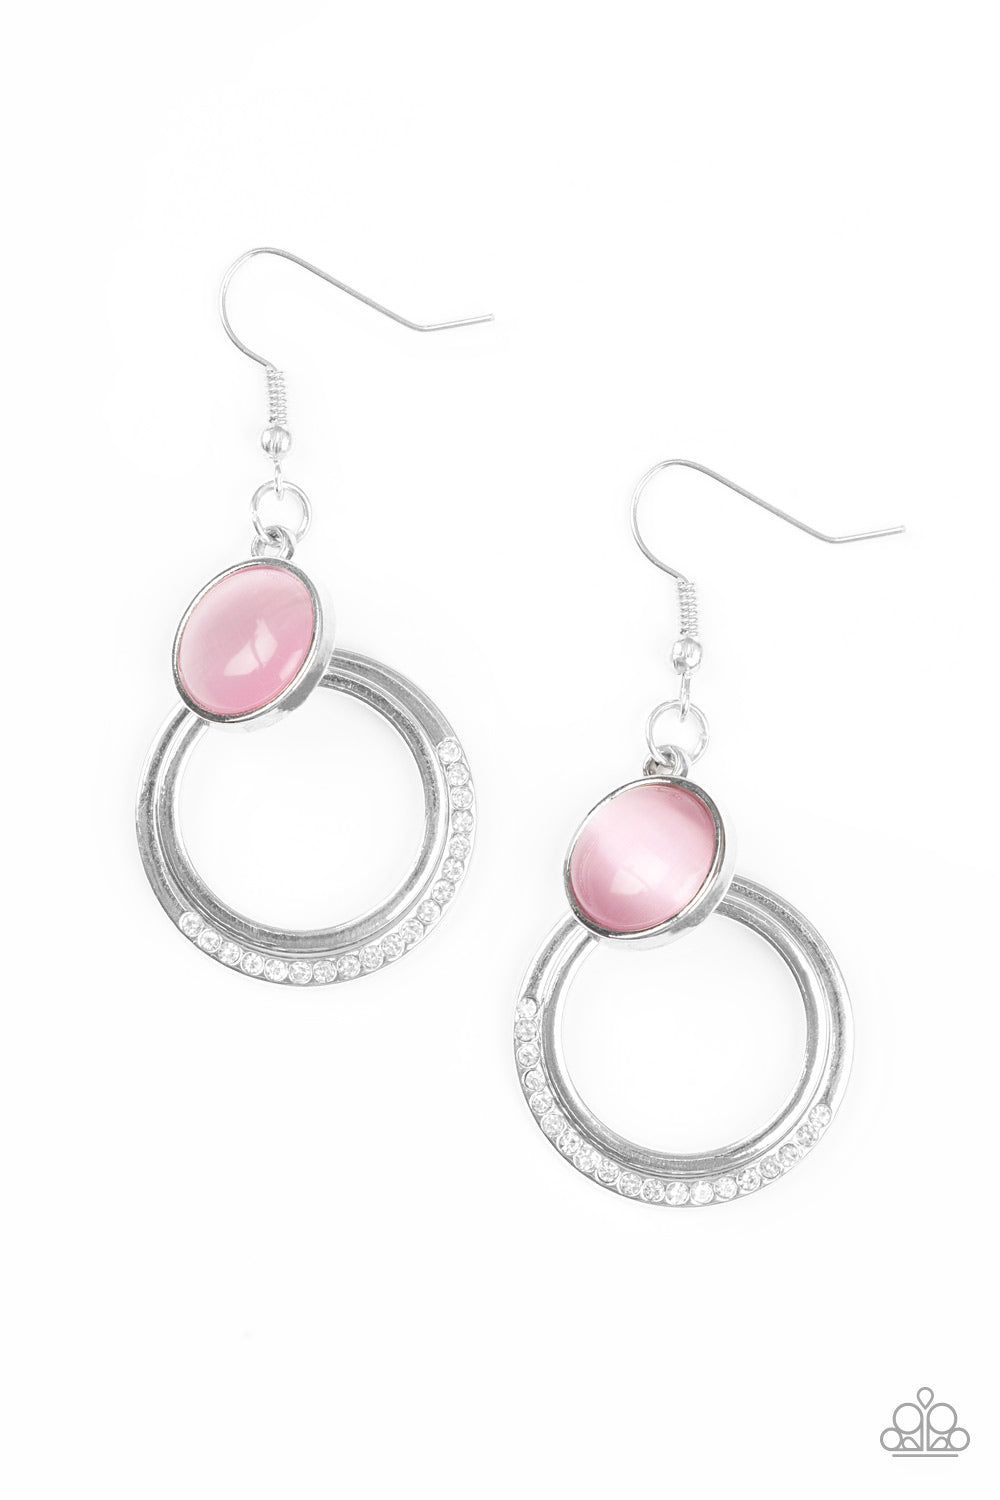 Dreamily Dreamland Pink Paparazzi Earrings Cashmere Pink Jewels - Cashmere Pink Jewels & Accessories, Cashmere Pink Jewels & Accessories - Paparazzi